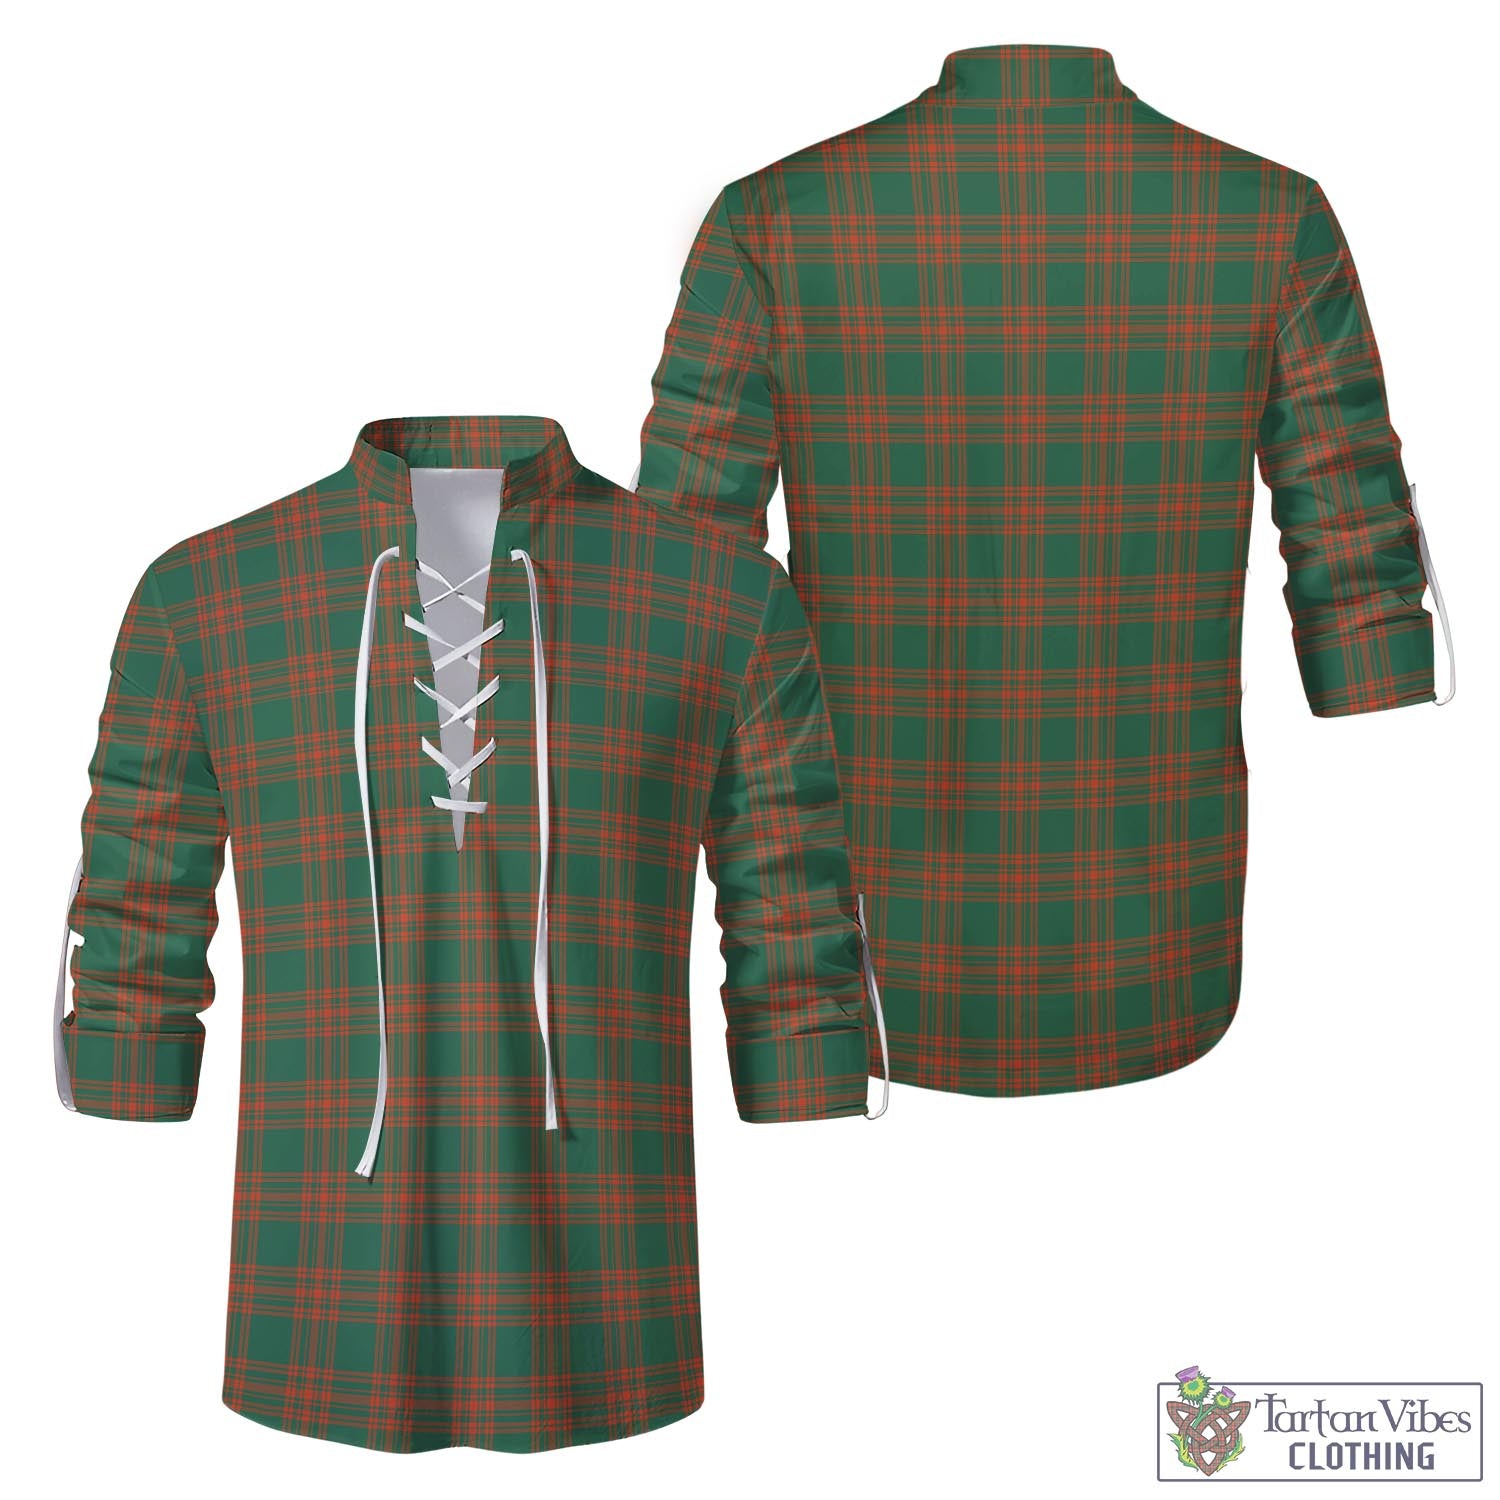 Tartan Vibes Clothing Menzies Green Ancient Tartan Men's Scottish Traditional Jacobite Ghillie Kilt Shirt